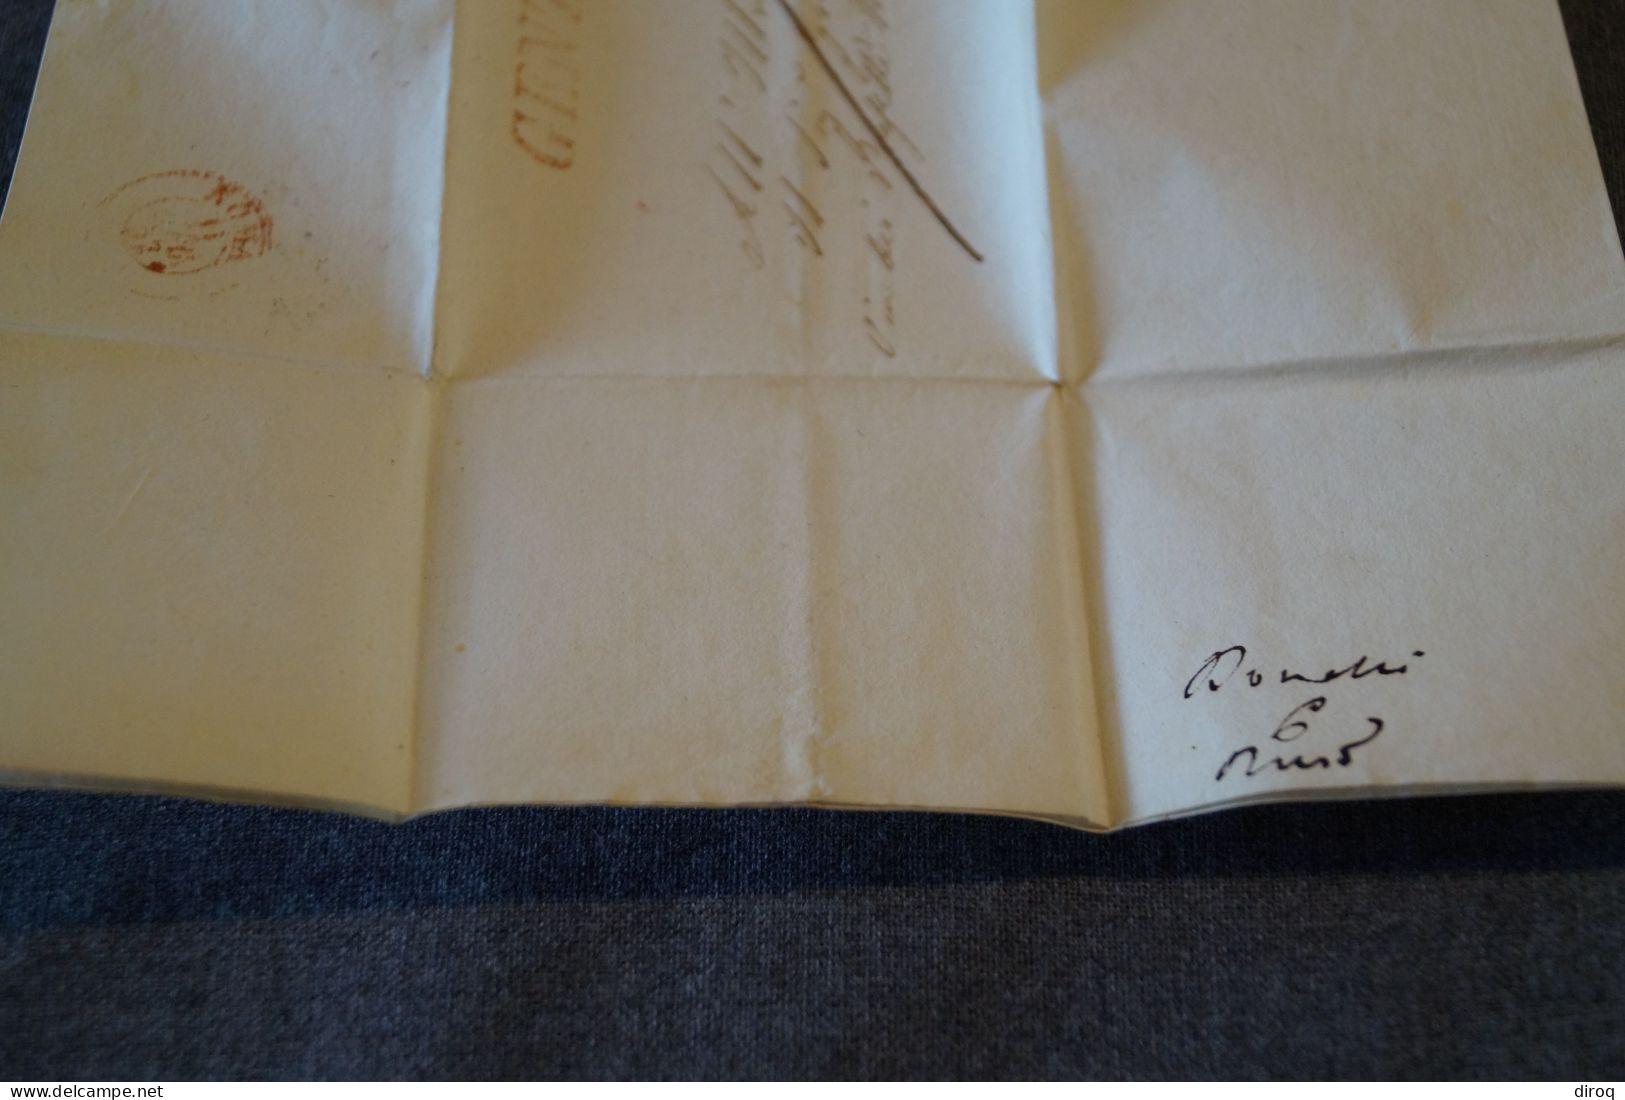 Ancien Envoi Franco Bollo Postale BAJ-2, Italia 1857,courrier à Identifier,pour Collection - Estados Pontificados